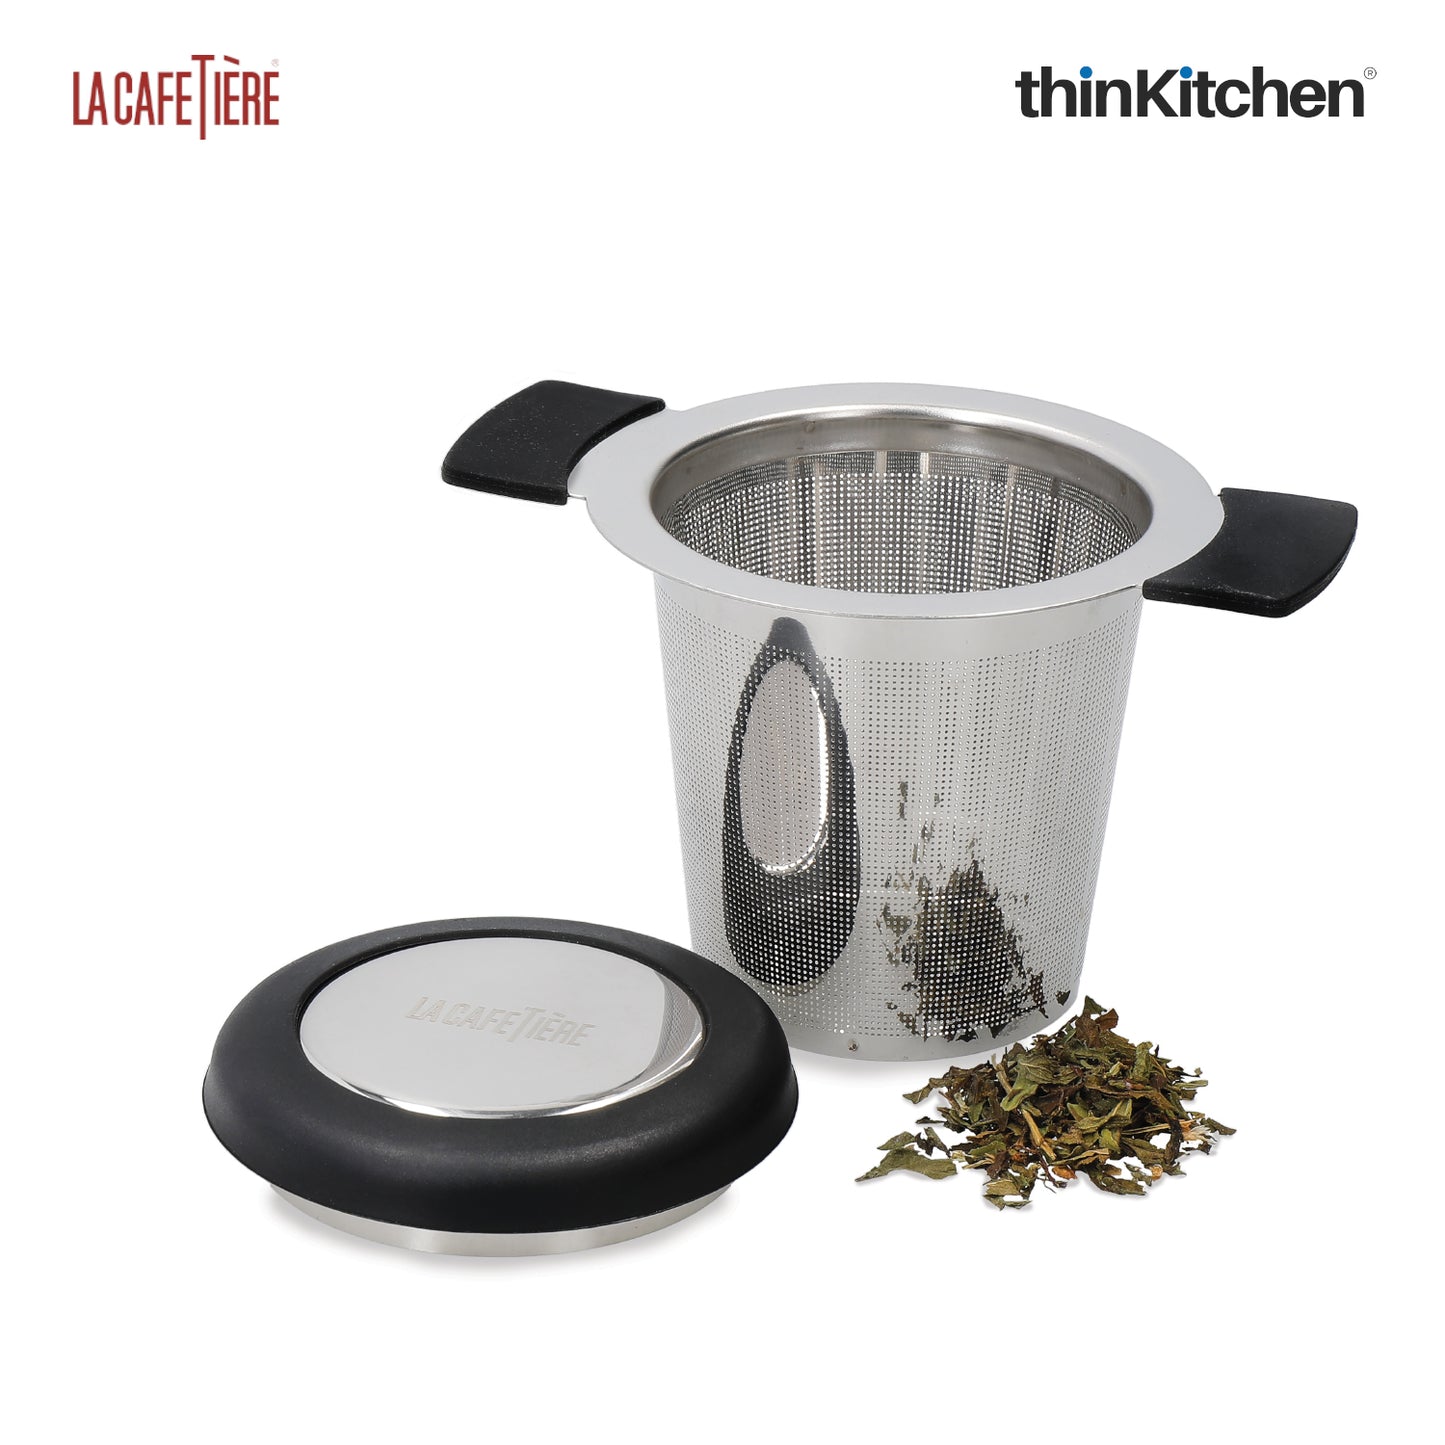 La Cafetiere Stainless Steel Tea Filter Basket